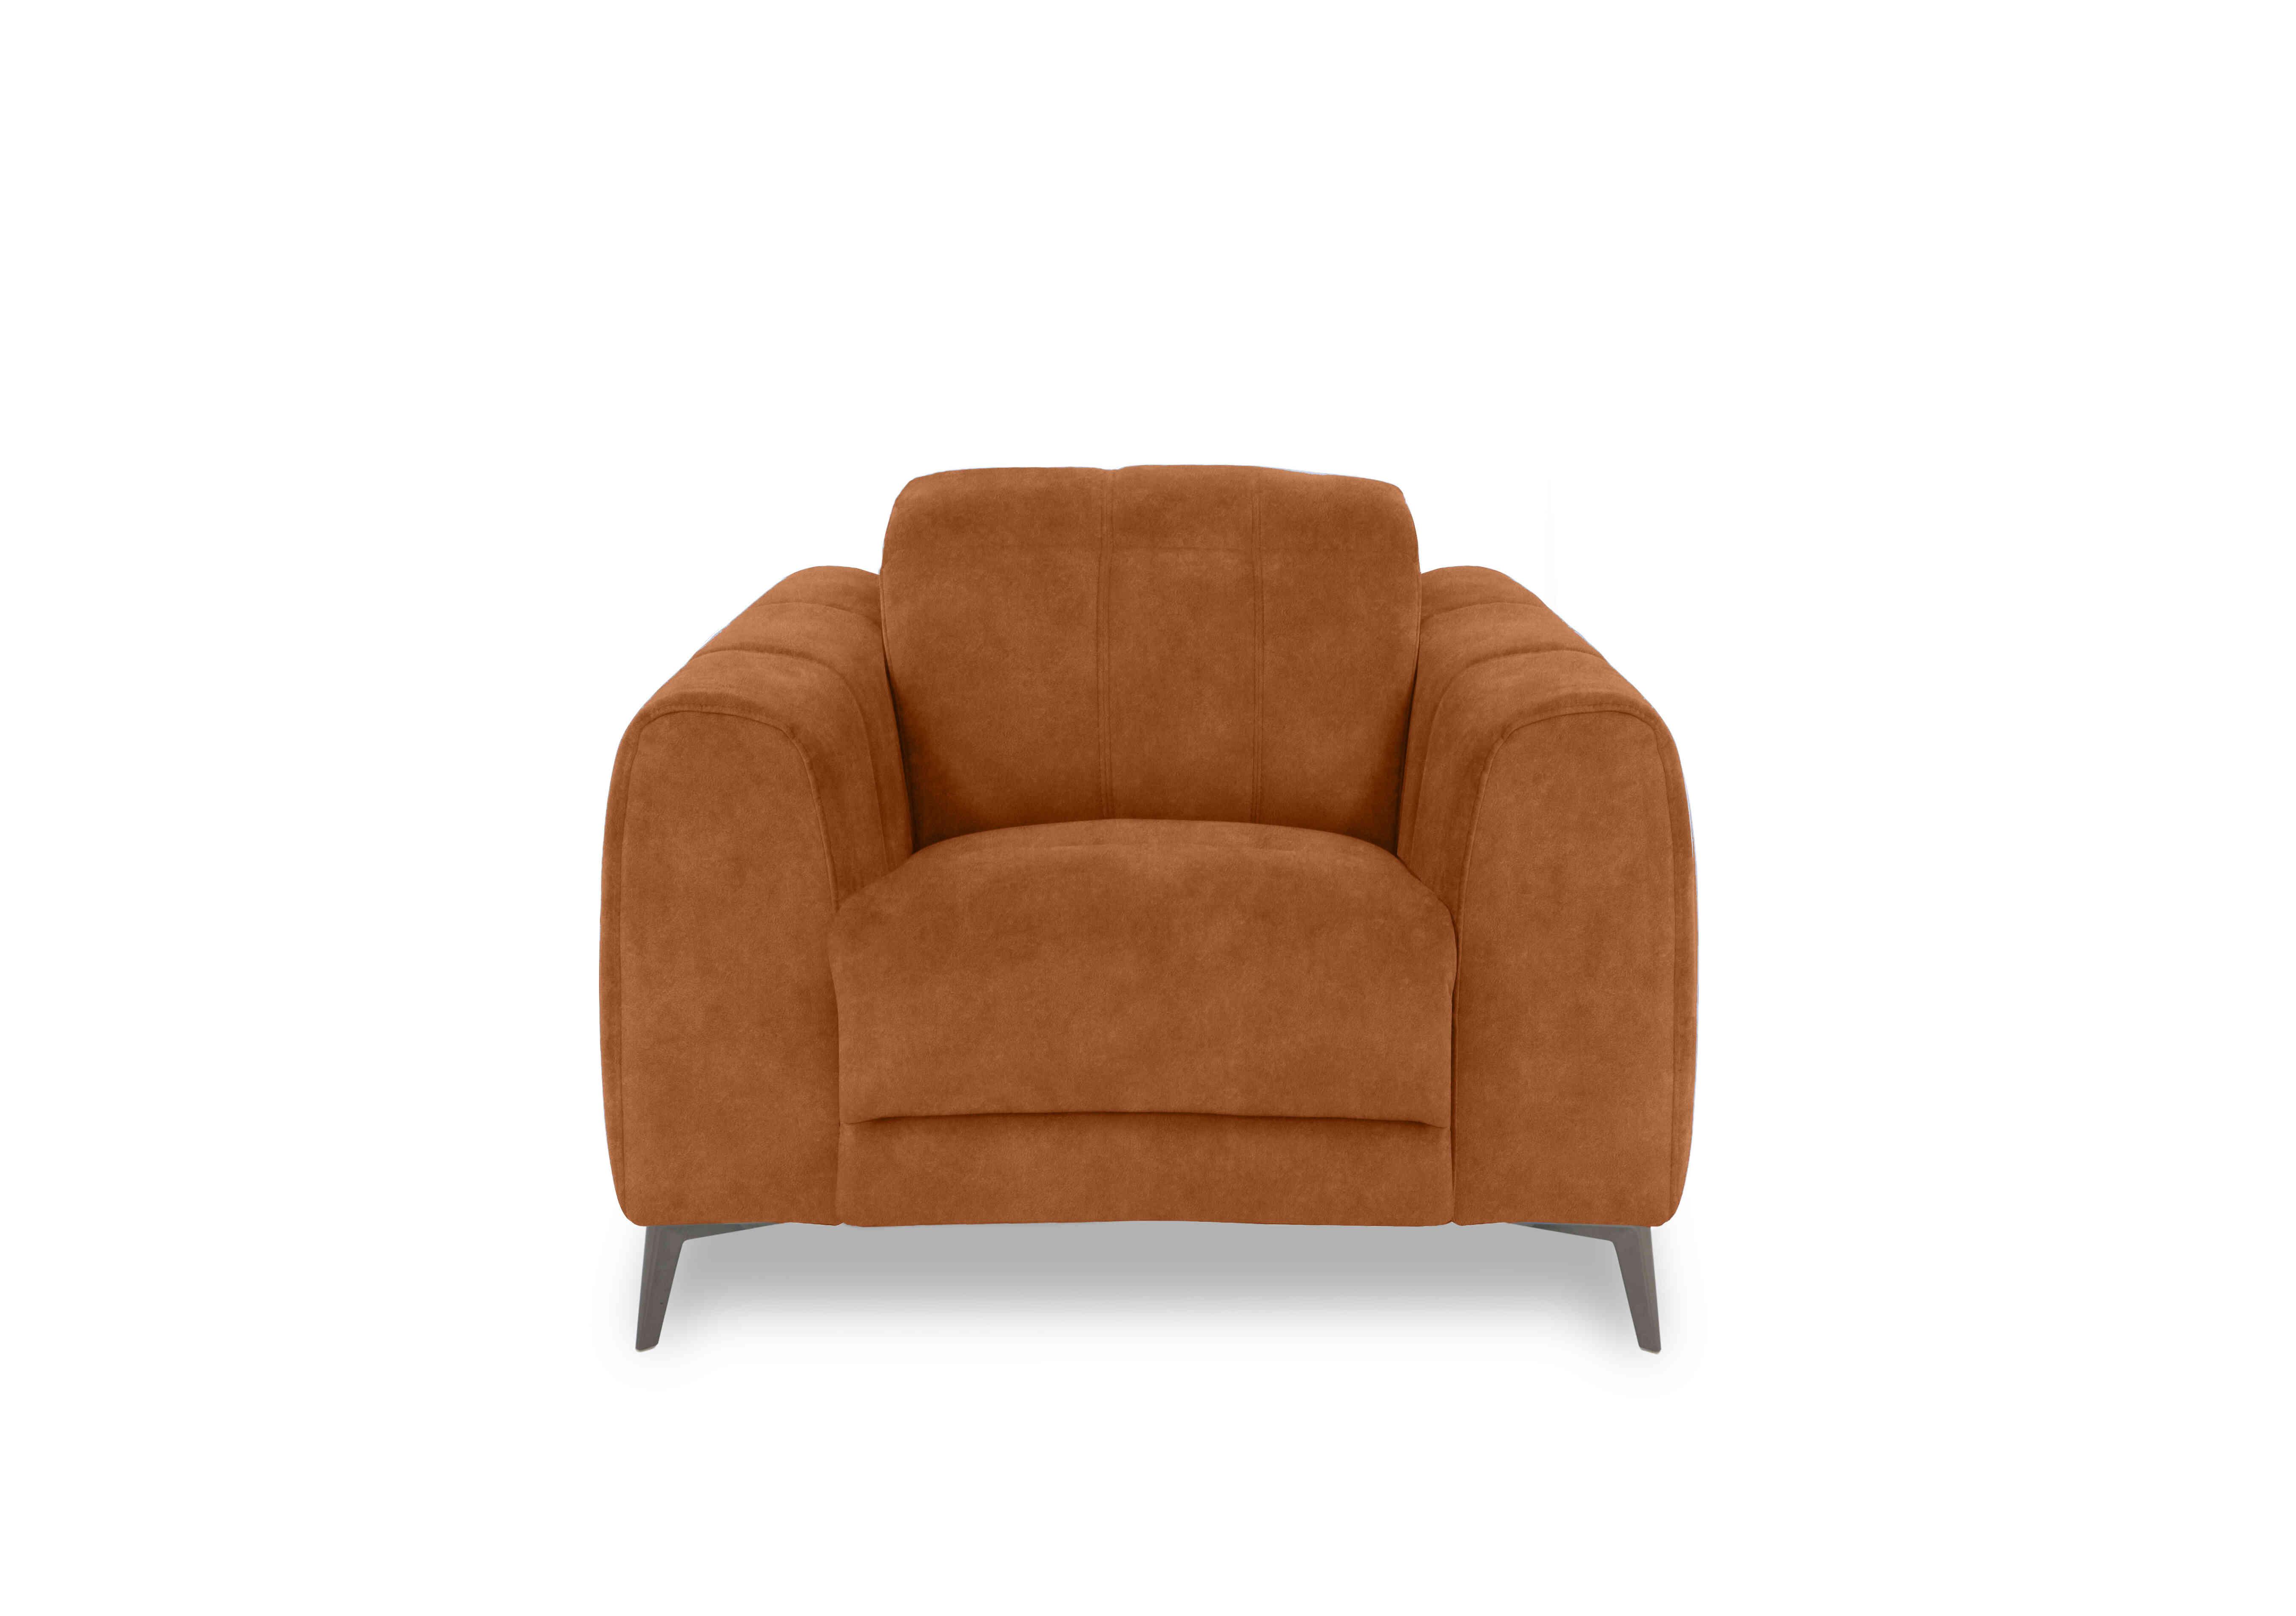 Ezra Fabric Chair in Dexter 43509 Pumpkin on Furniture Village